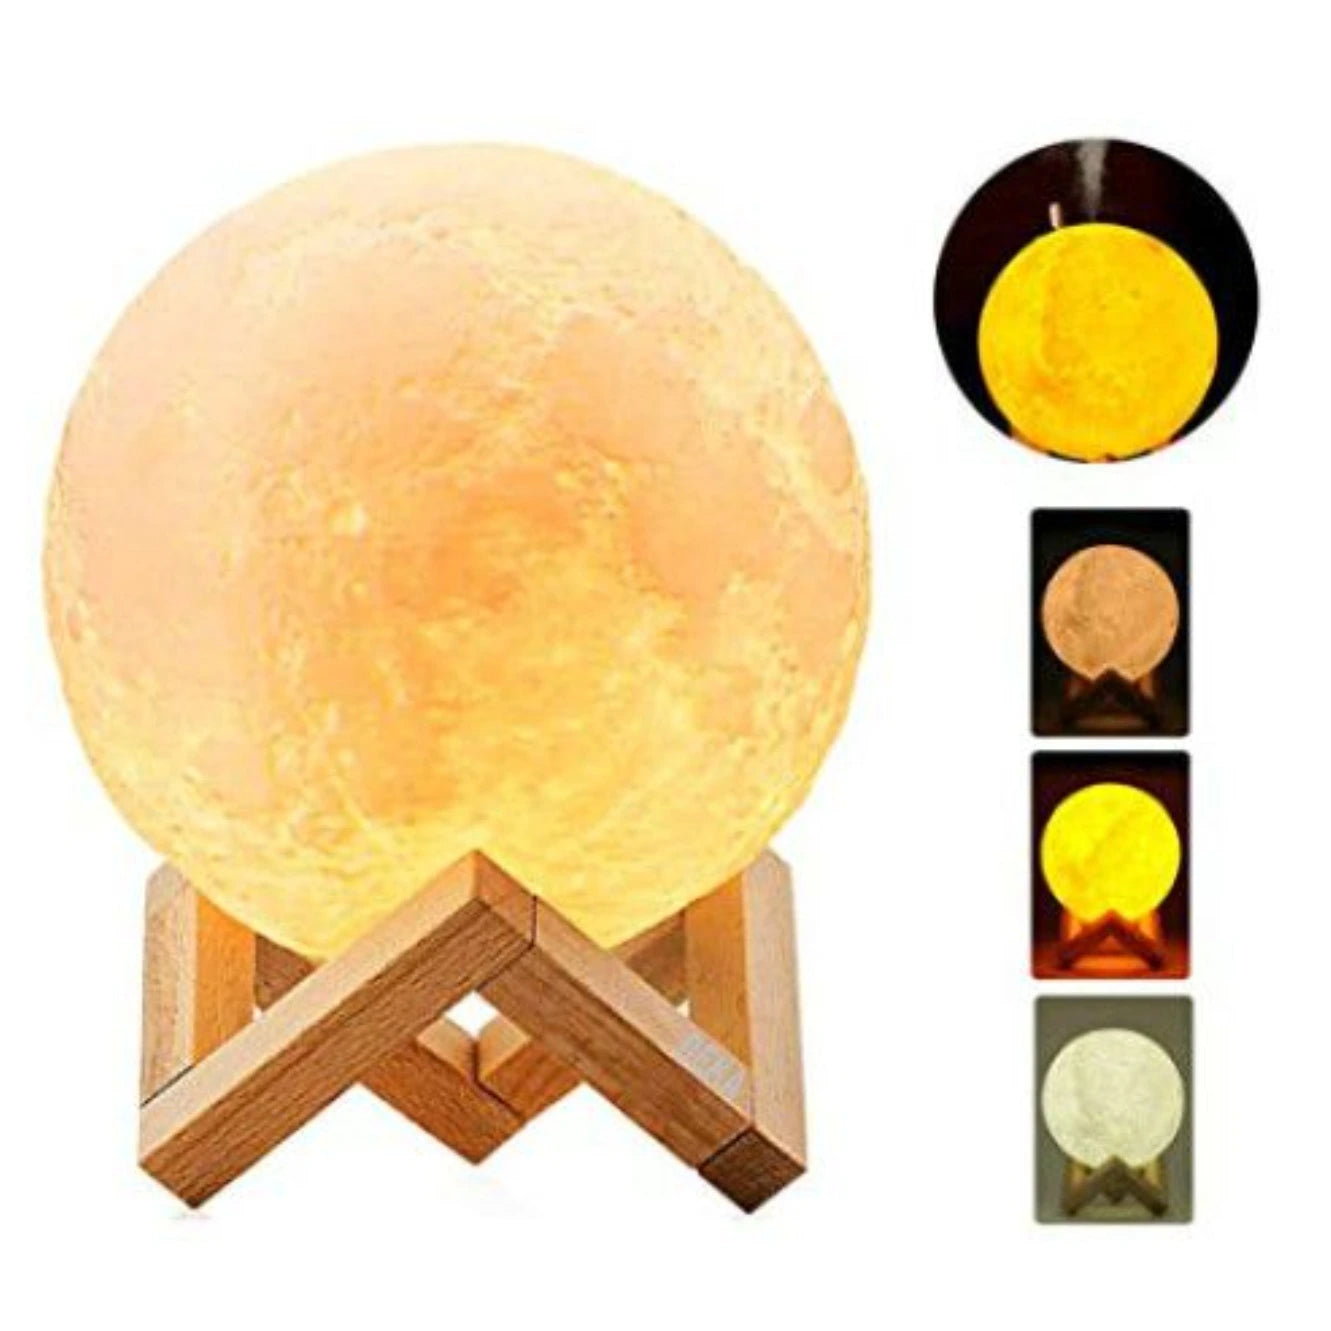 Lampa de veghe cu umidificator, Luna Moon 3D, 880 ml